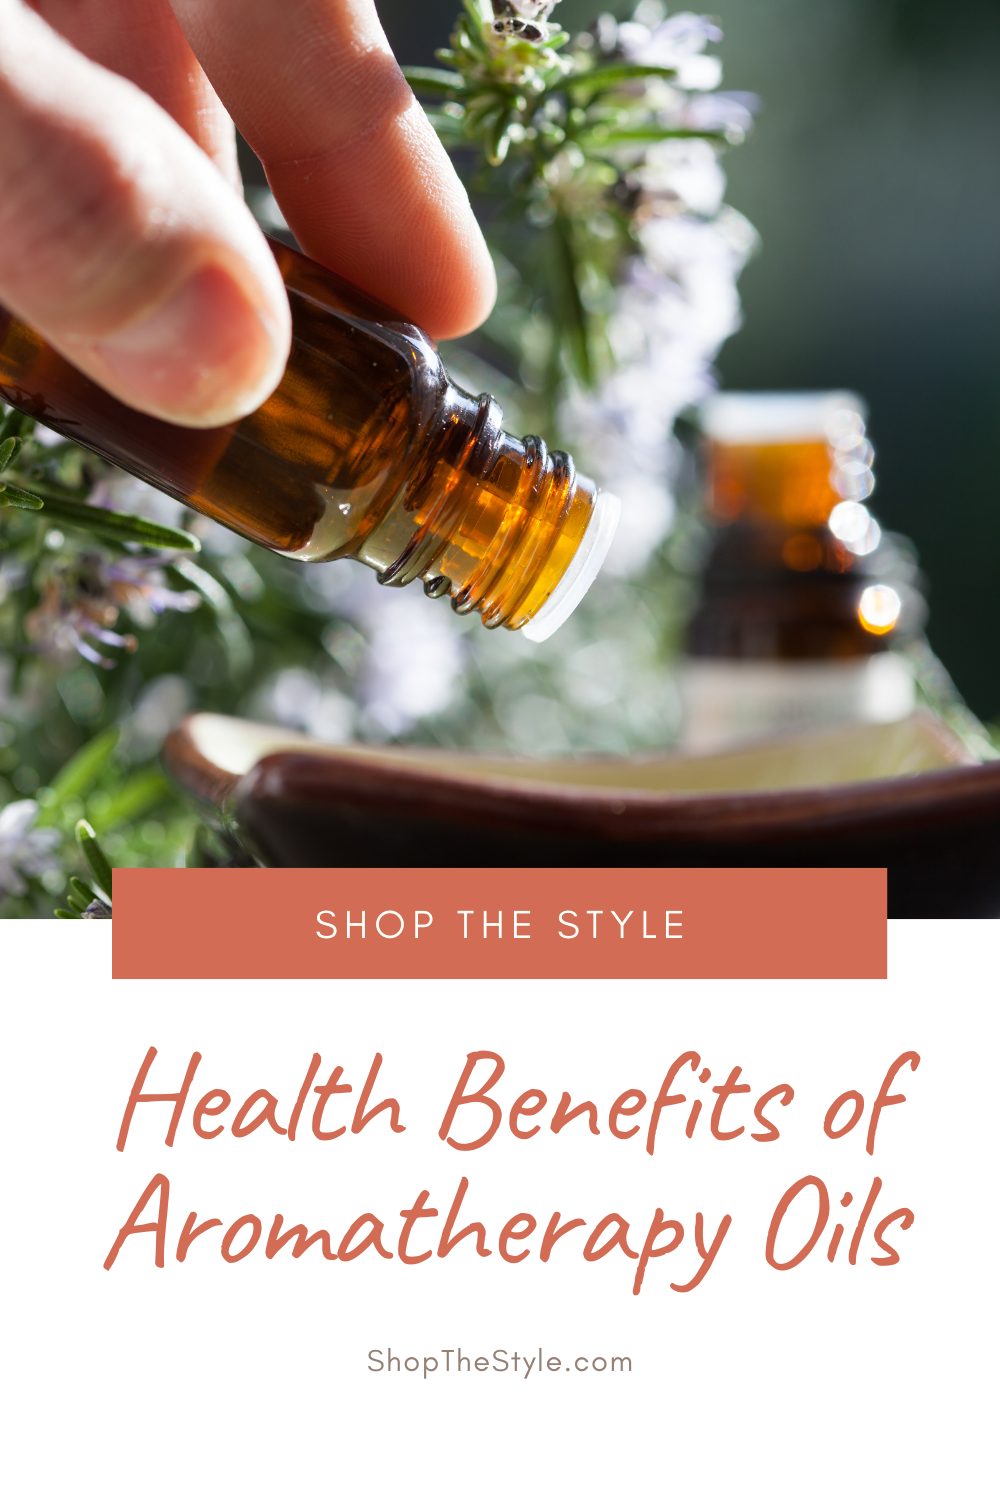 Health Benefits of Aromatherapy Oils